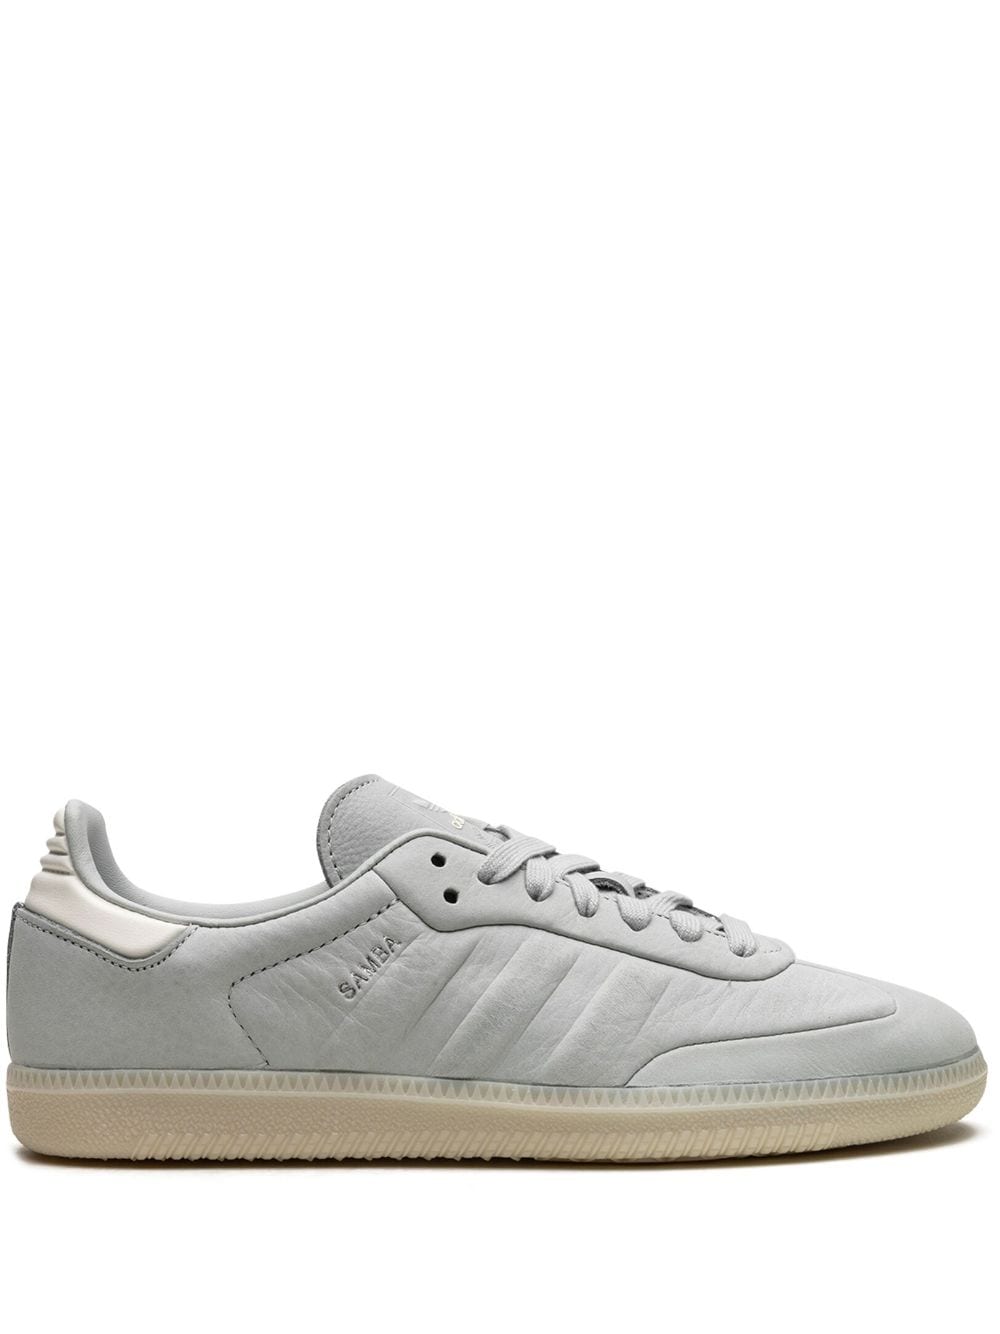 adidas Samba leather sneakers - Grey von adidas